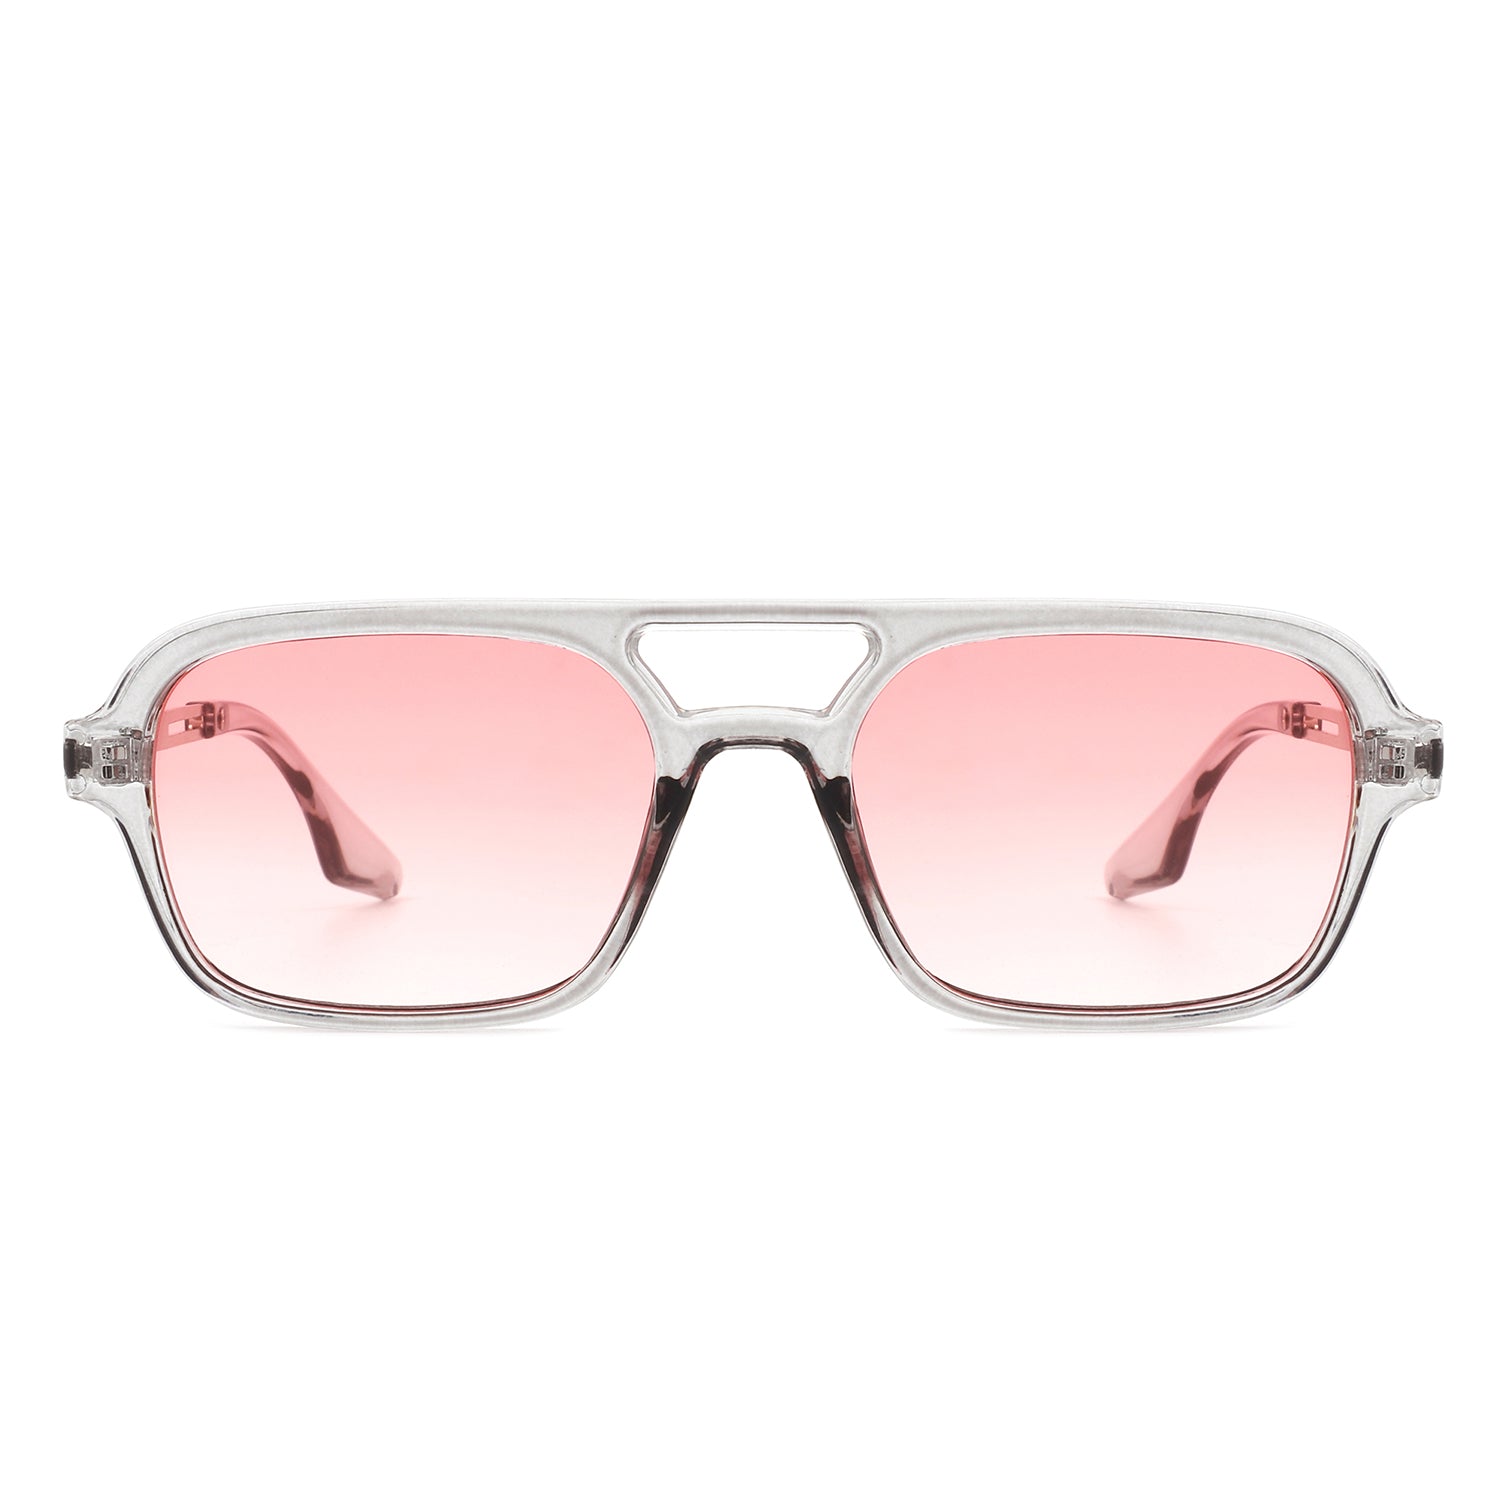 HS1099 - Retro Square Brow-Bar Fashion Aviator Style Vintage Sunglasses